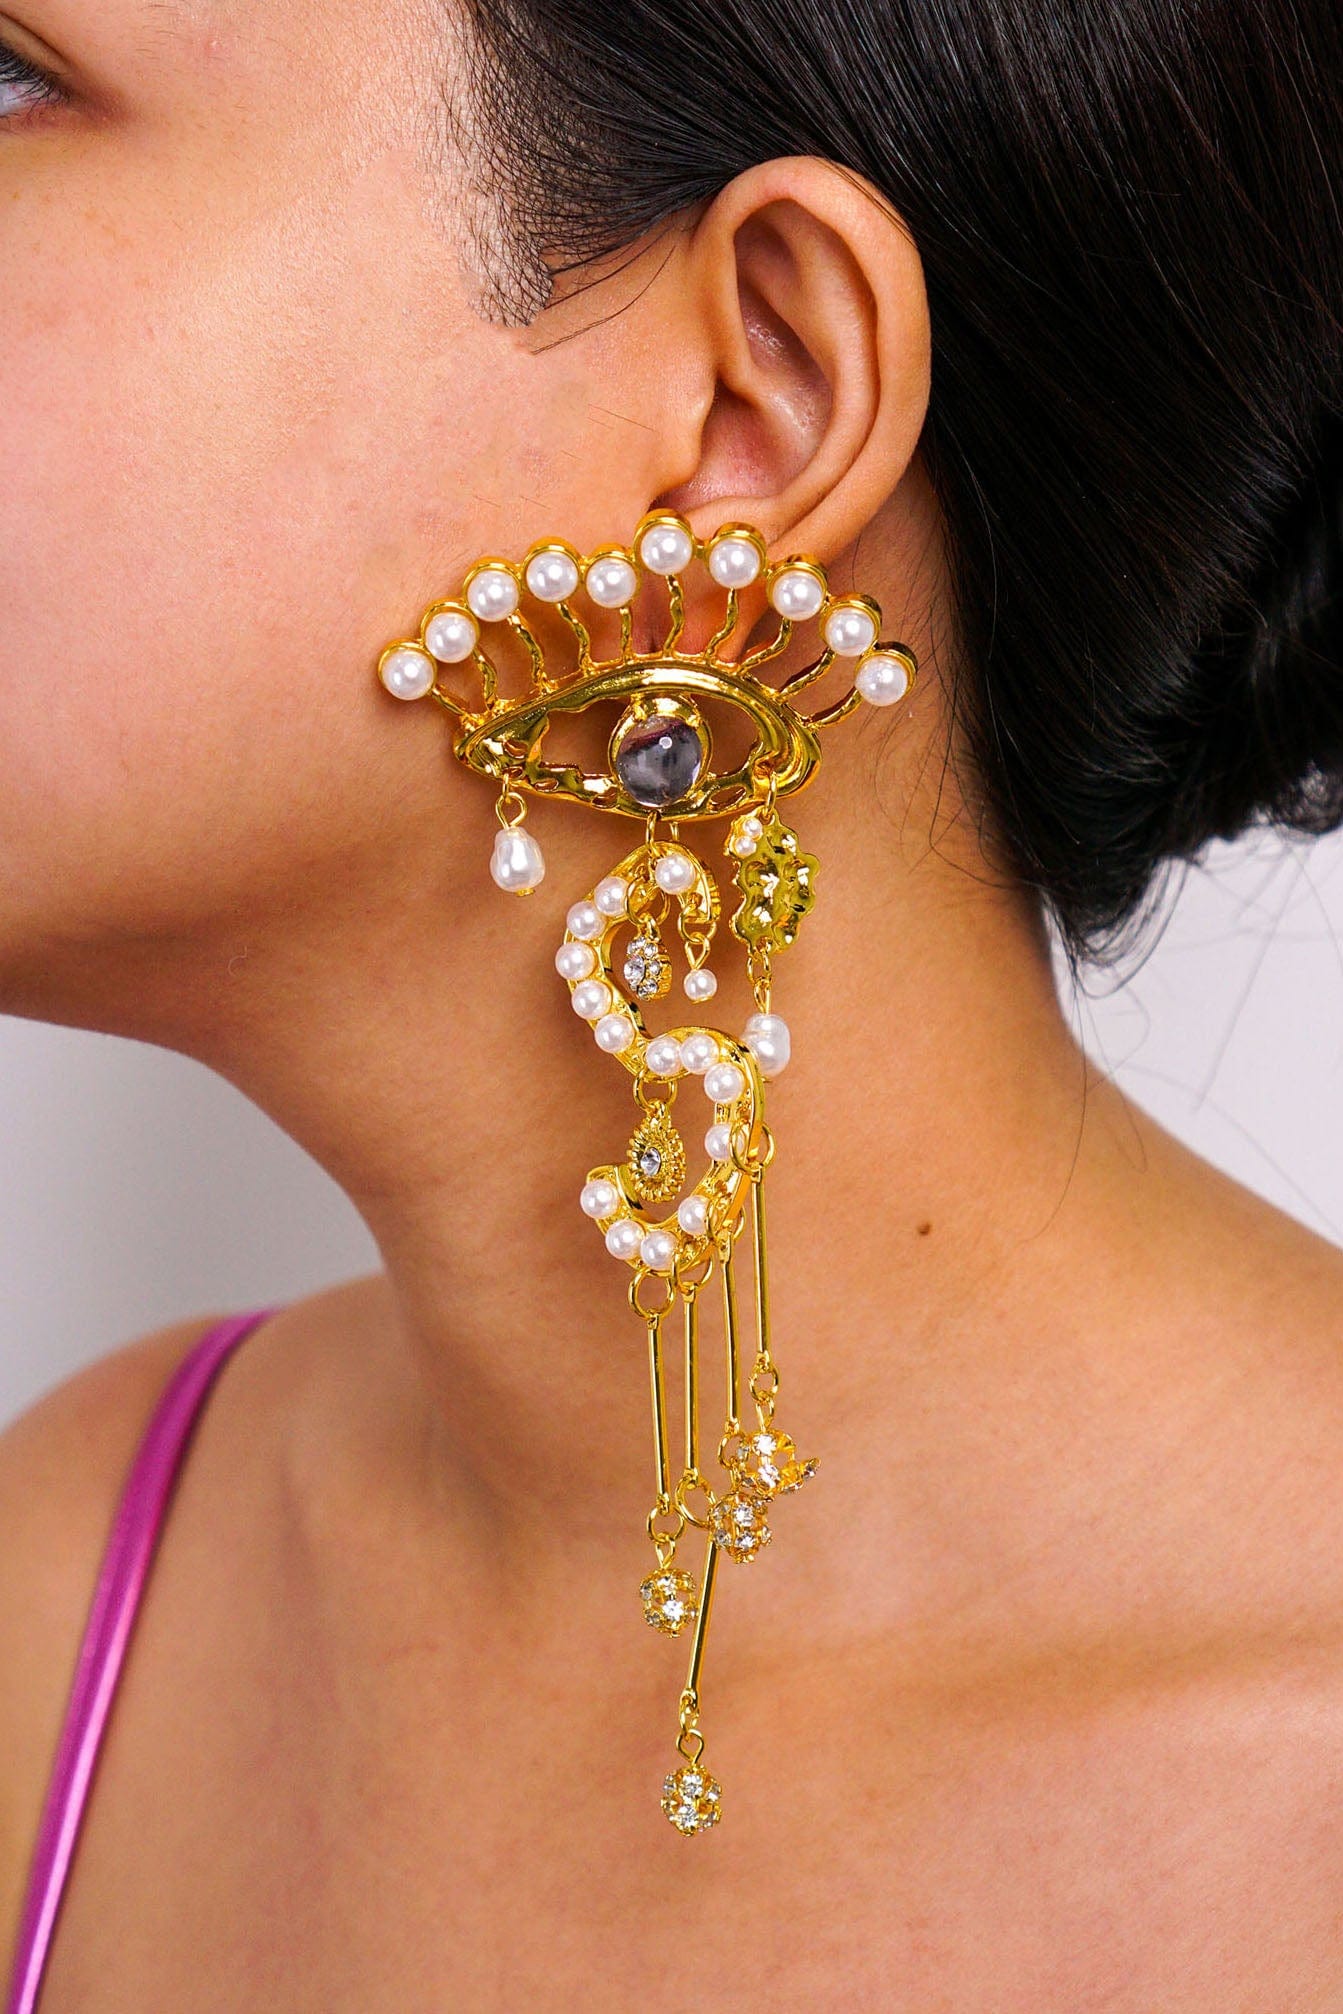 DCD EARRINGS Gold and Pearls Eye Tassel Earrings